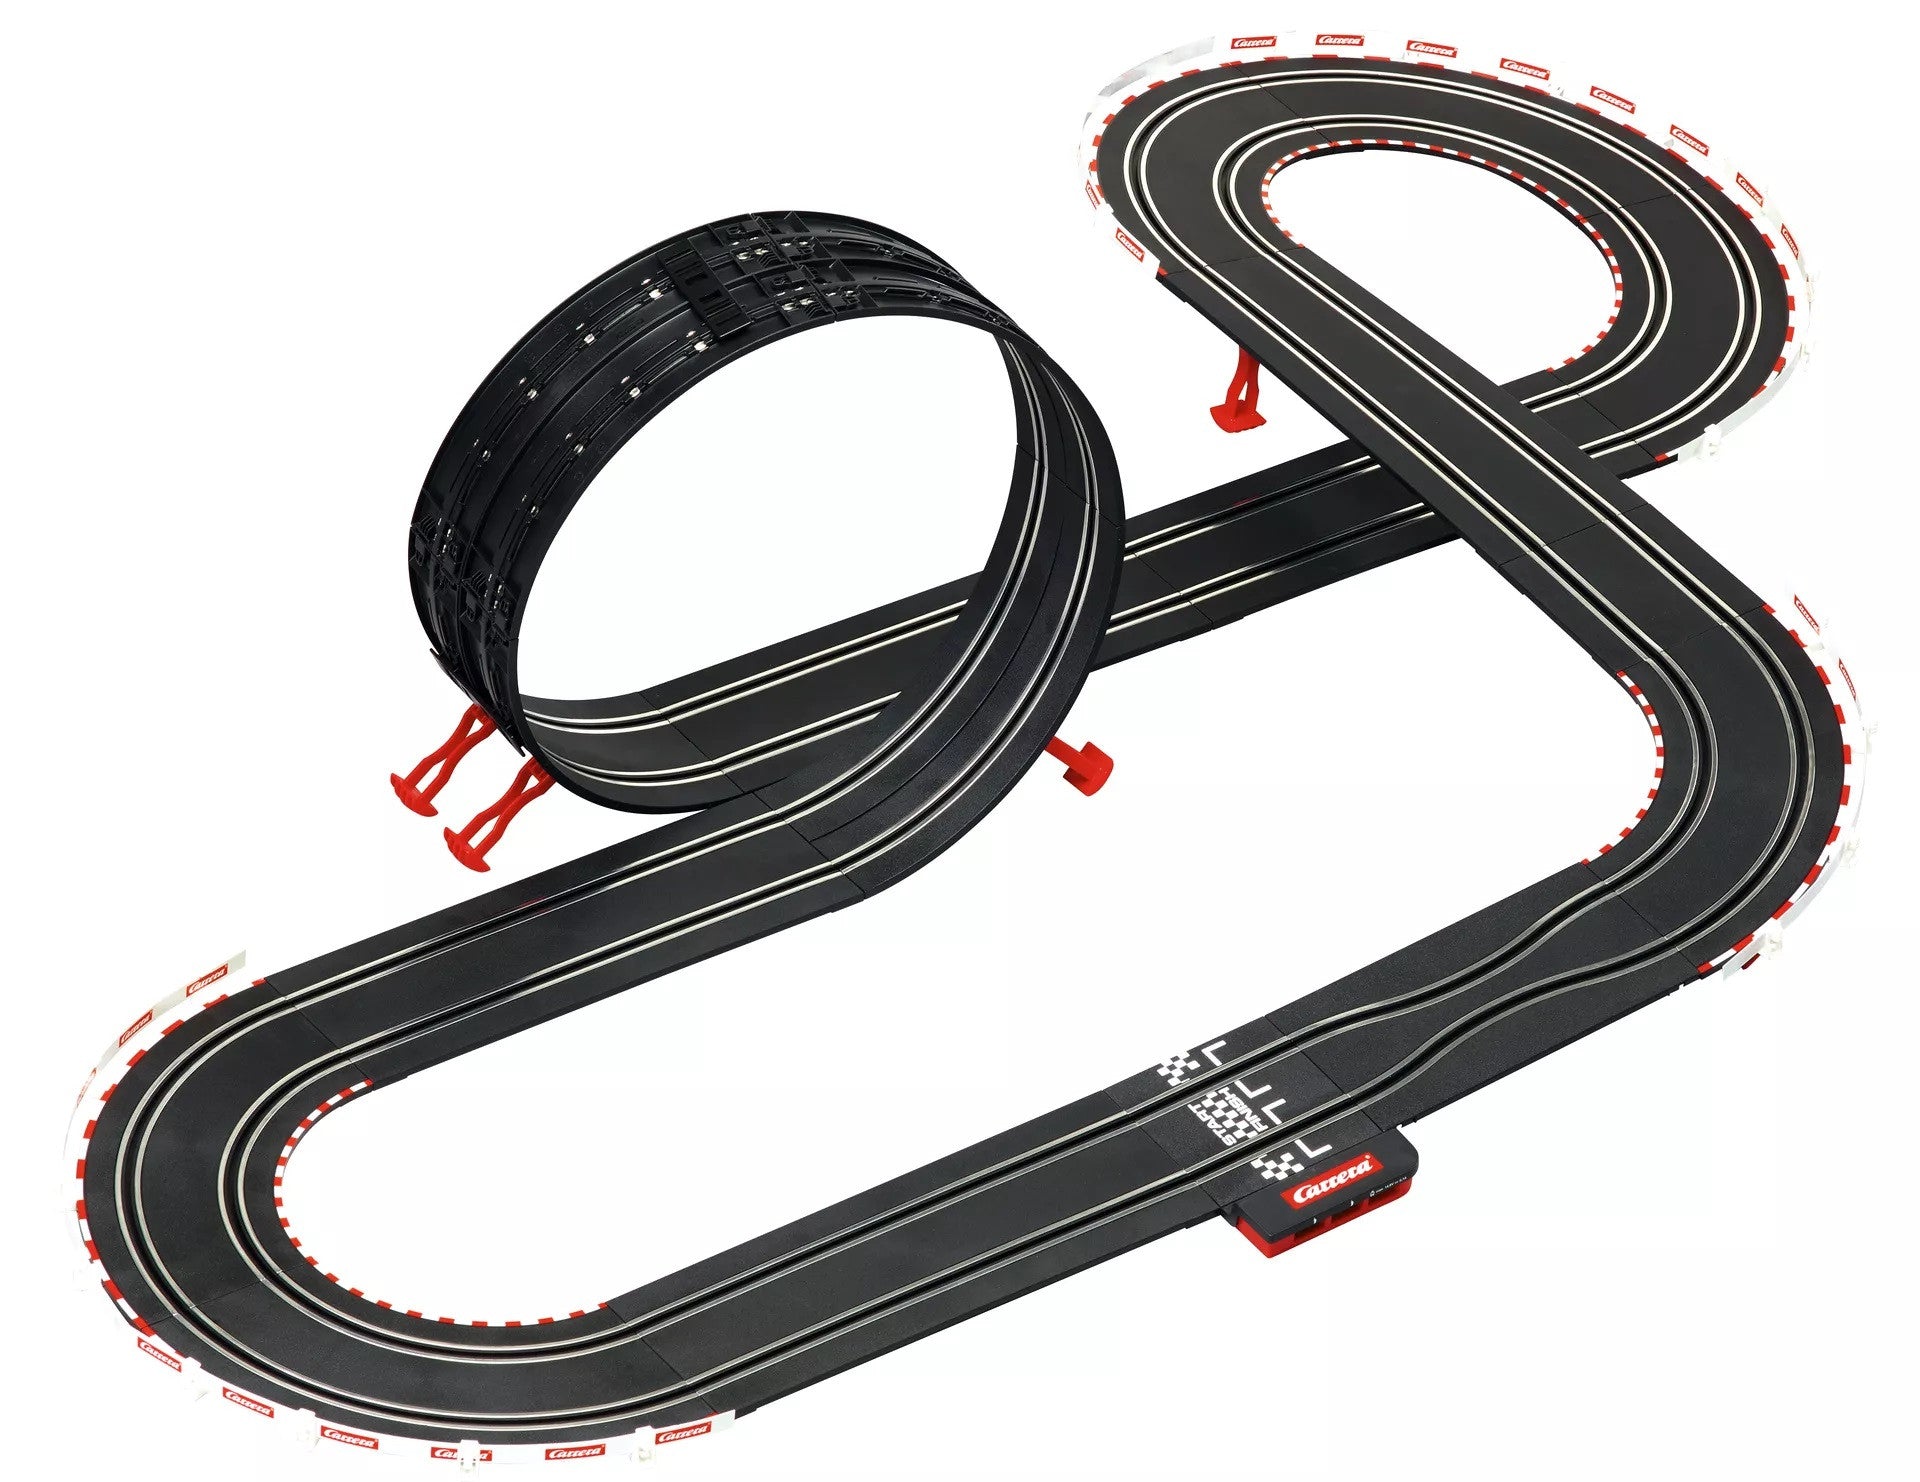 Circuit voitures Carrera GO!!! Hot Wheels 6.4 - 62553